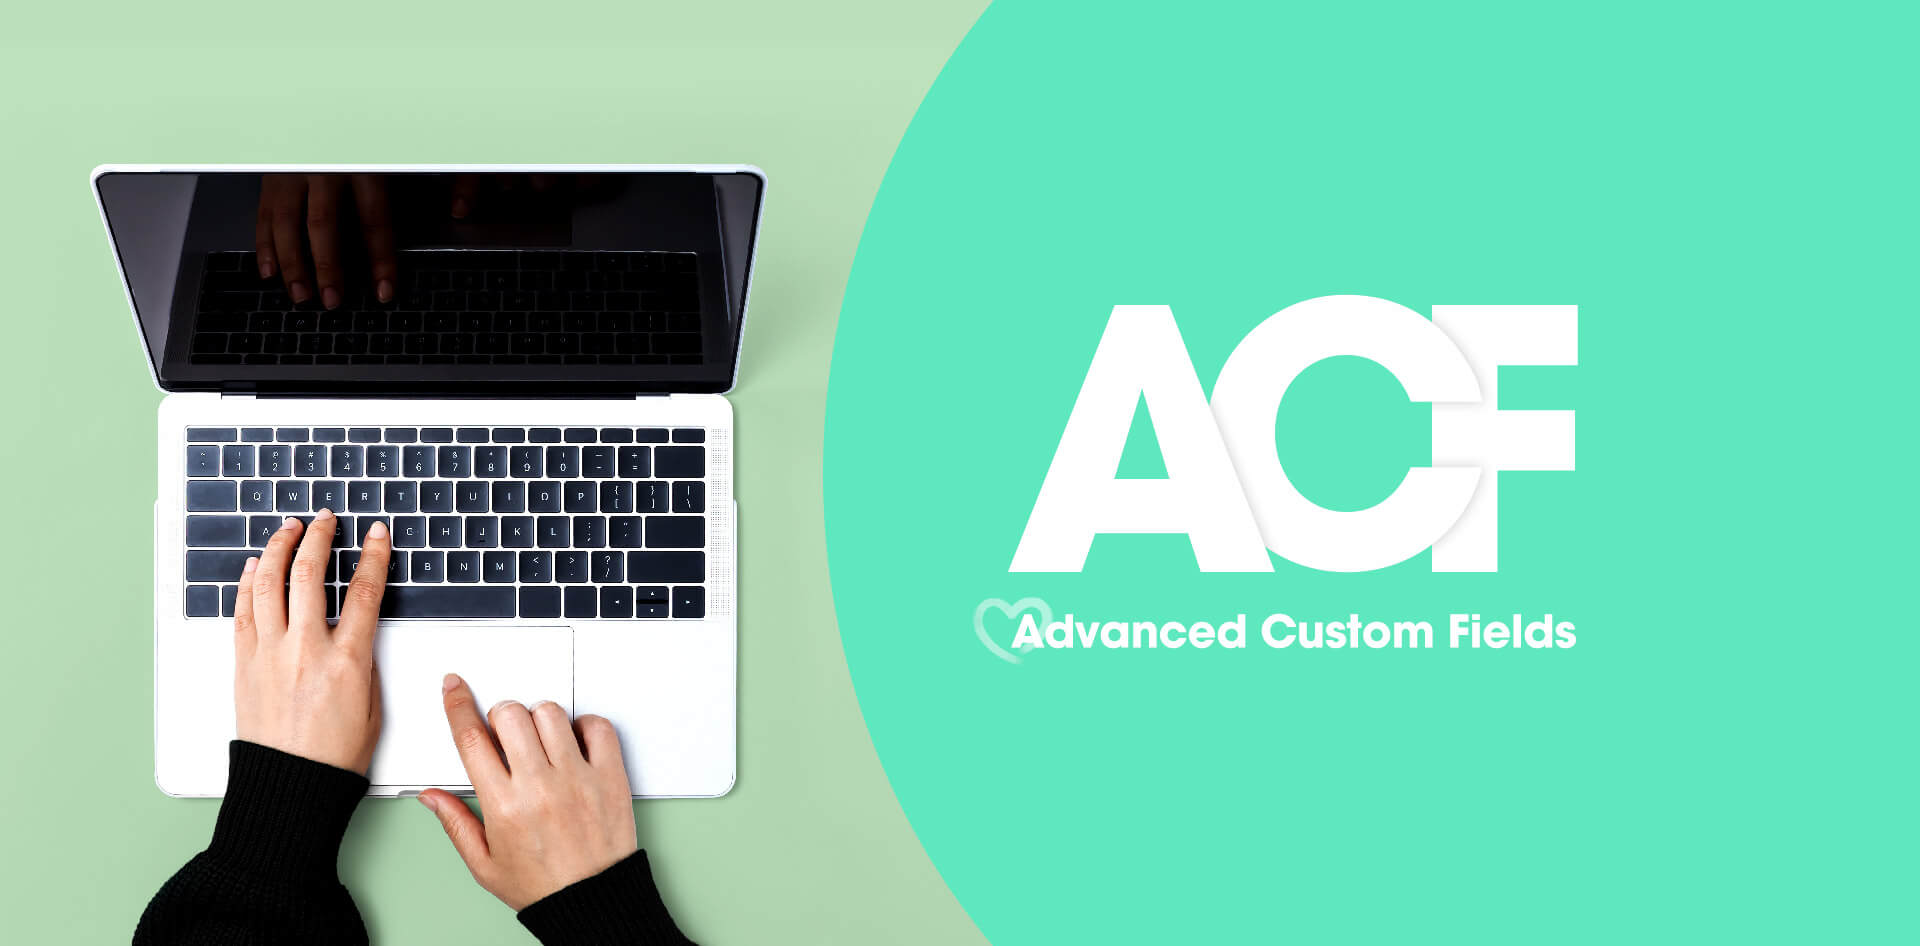 Advanced Custom Fields: A <em>Guide for ACF</em> and Its Benefits